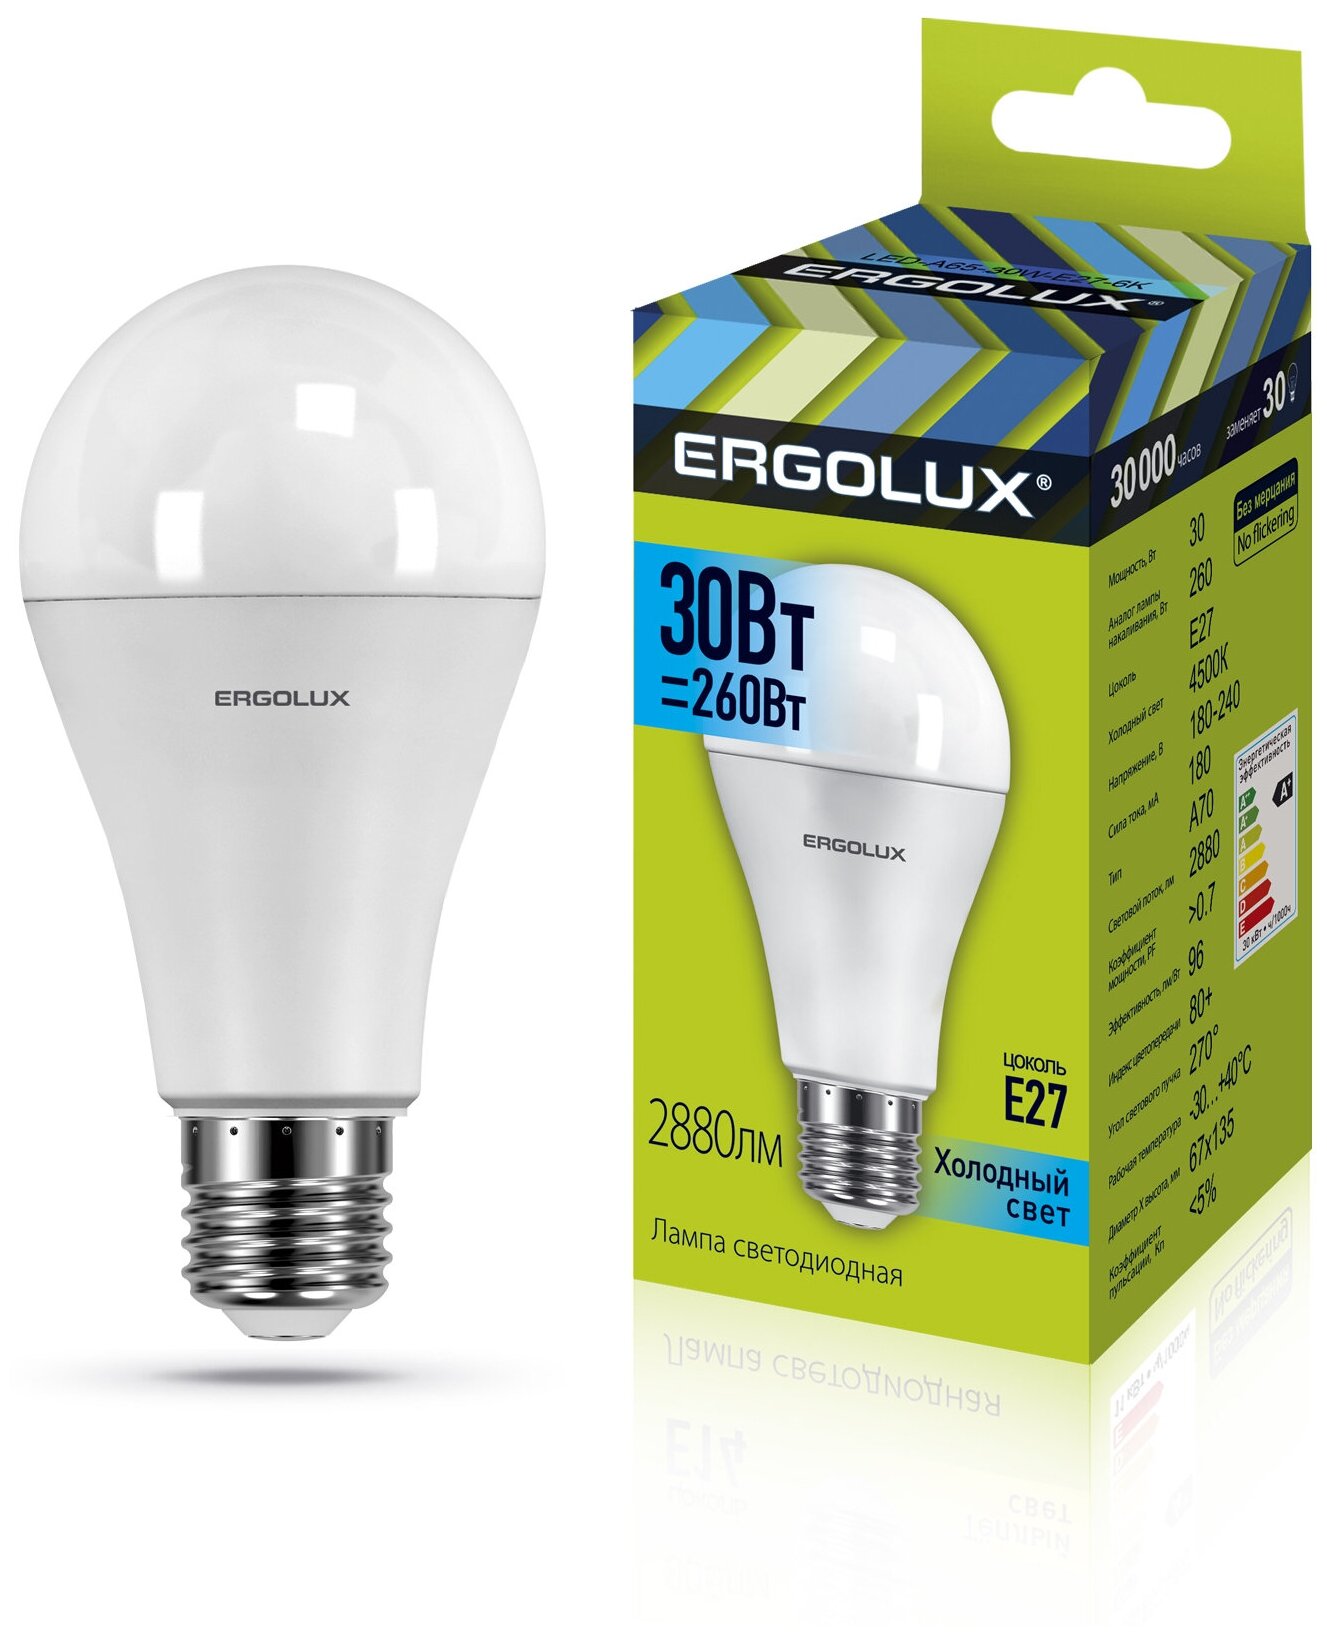 Ergolux LED-A70-30W-E27-4K (Эл.лампа светодиодная ЛОН 30Вт E27 4500K 180-240В), цена за 1 шт.